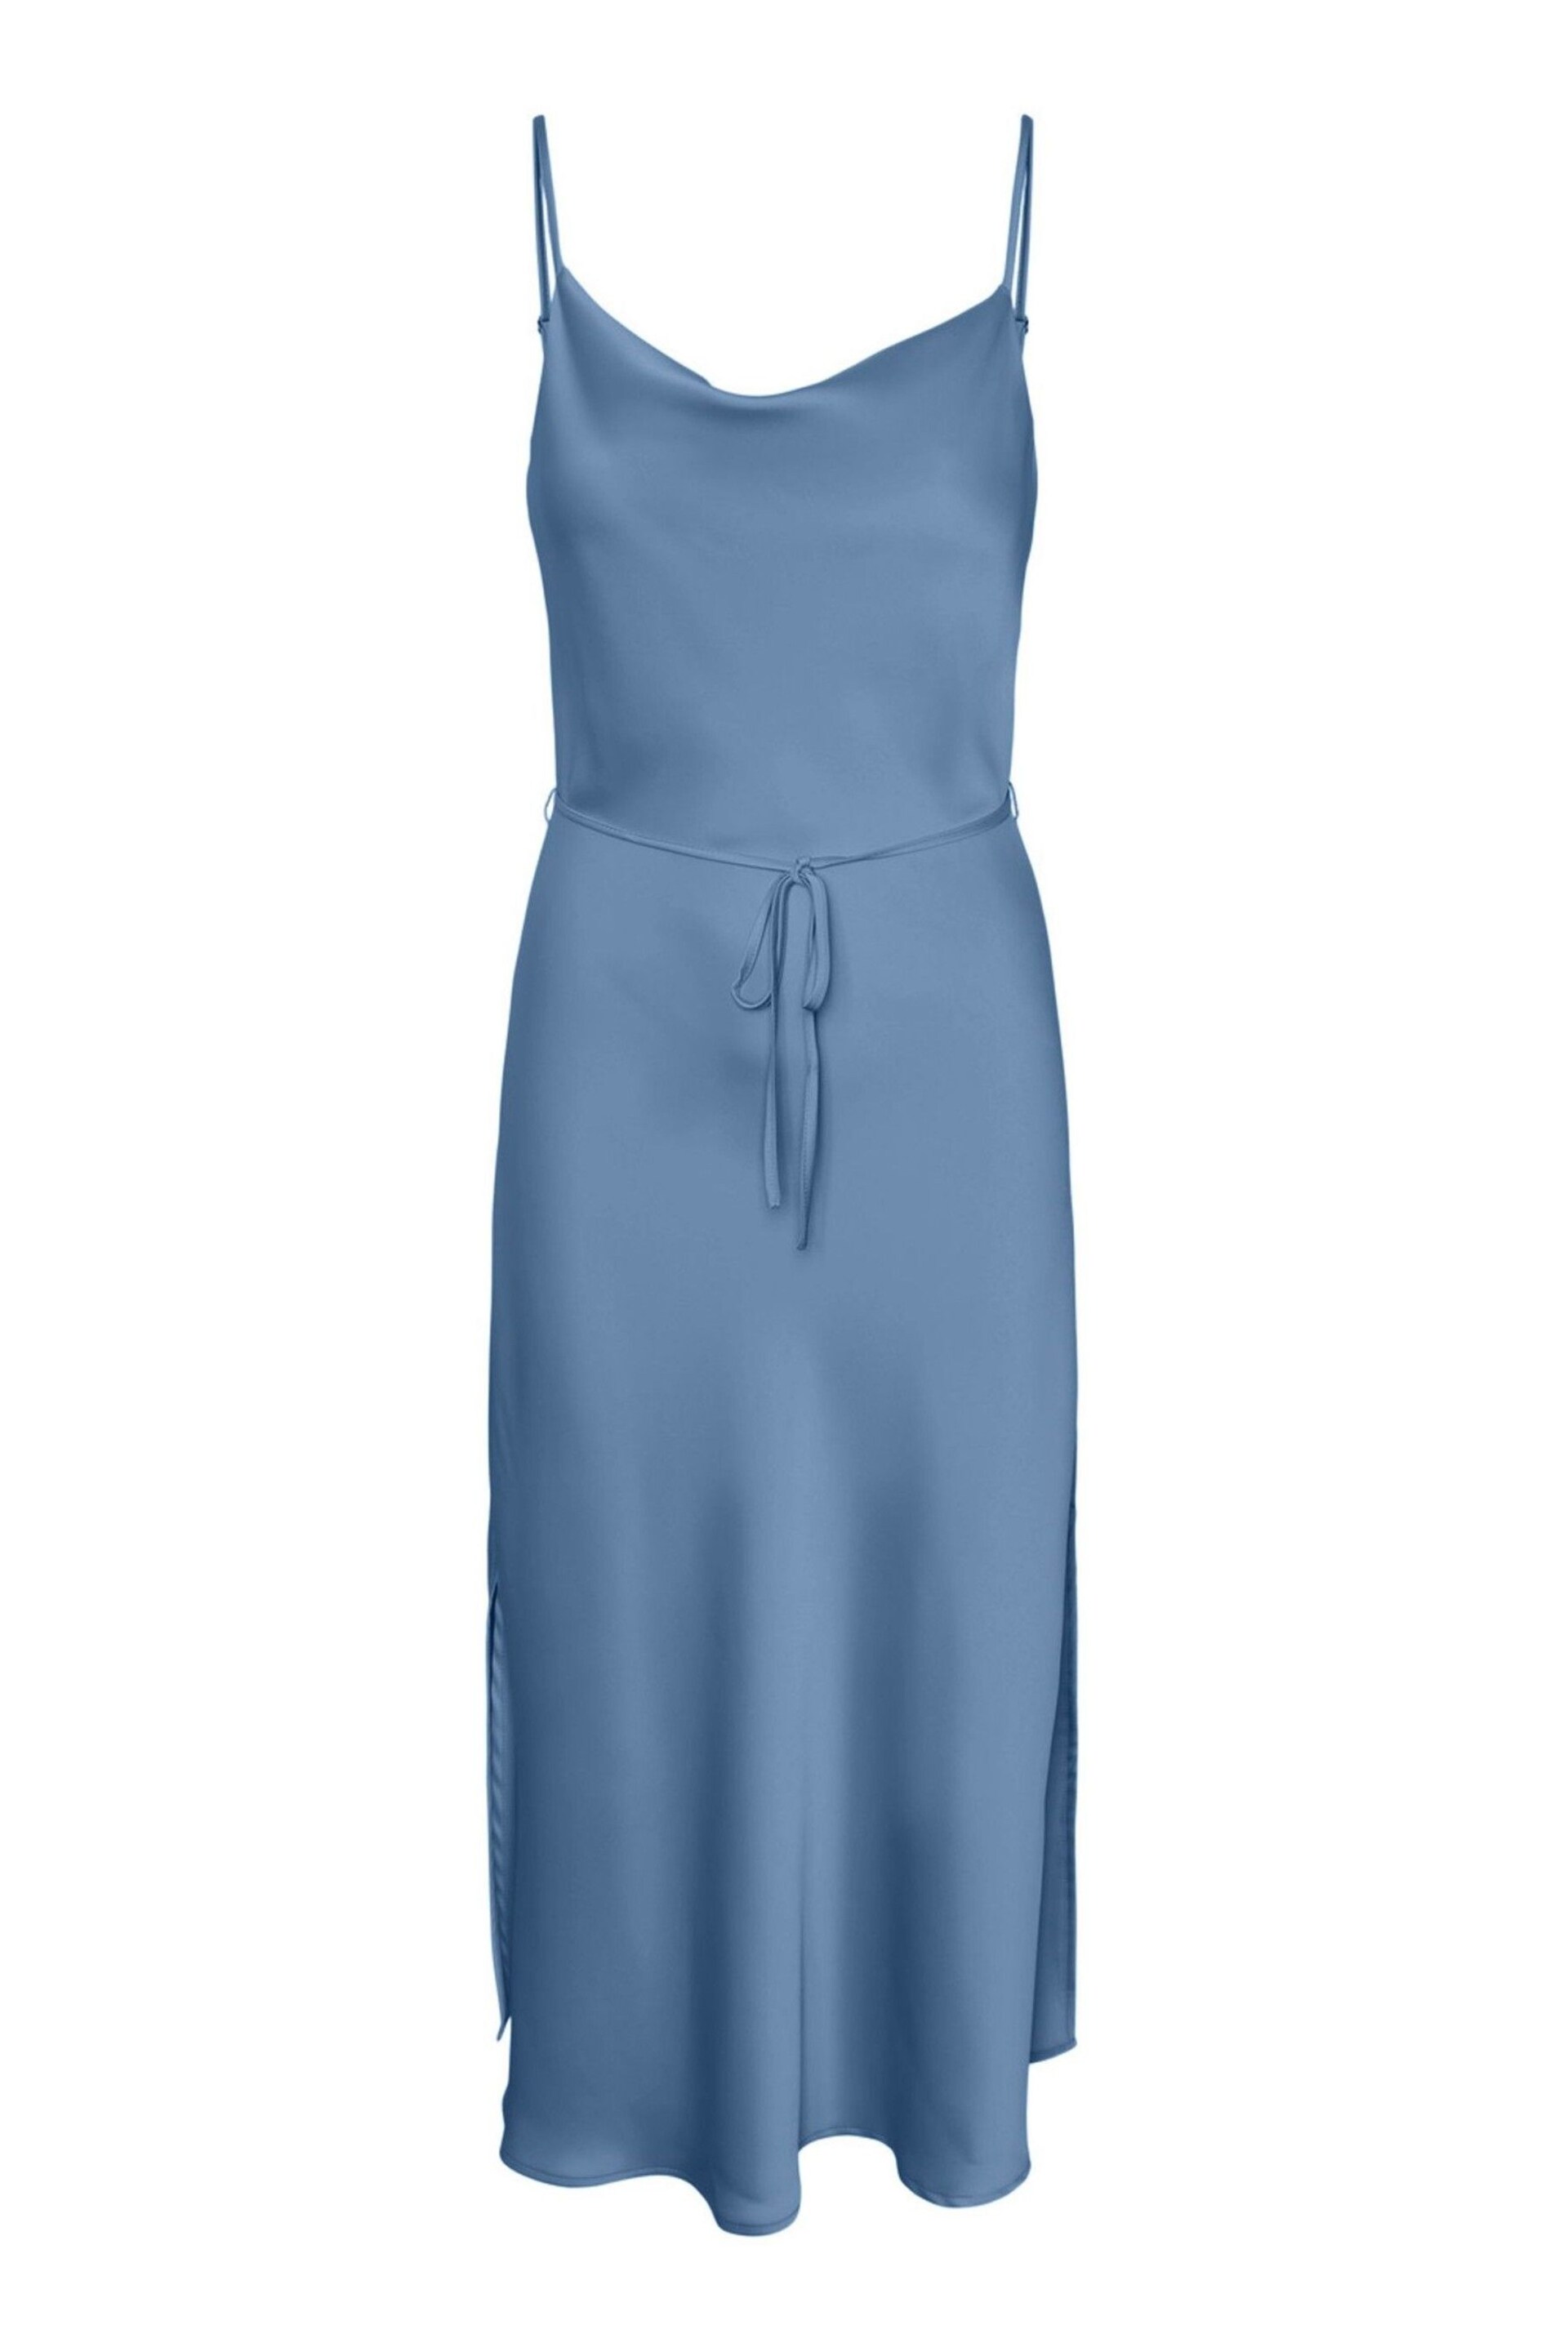 Y.A.S Blue Satin Cowl Neck Slip Dress - Image 5 of 5